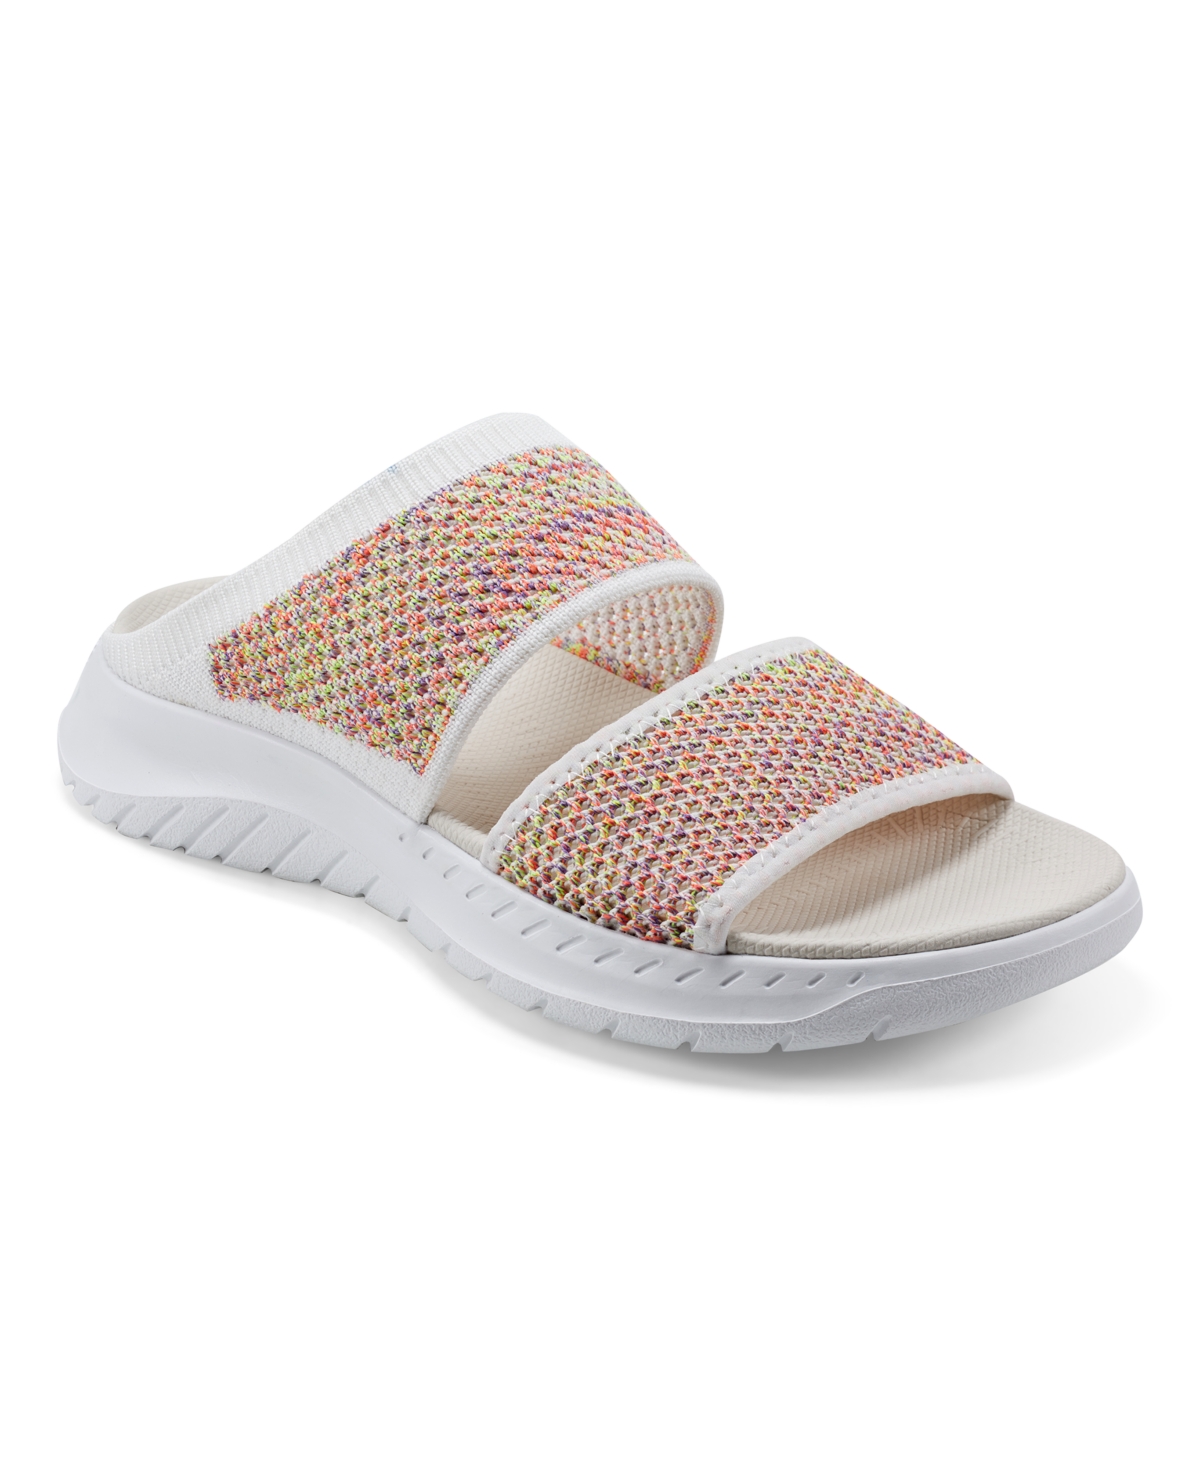 Women's Davera Round Toe Flat Casual Sandals - Rainbow Multi, White